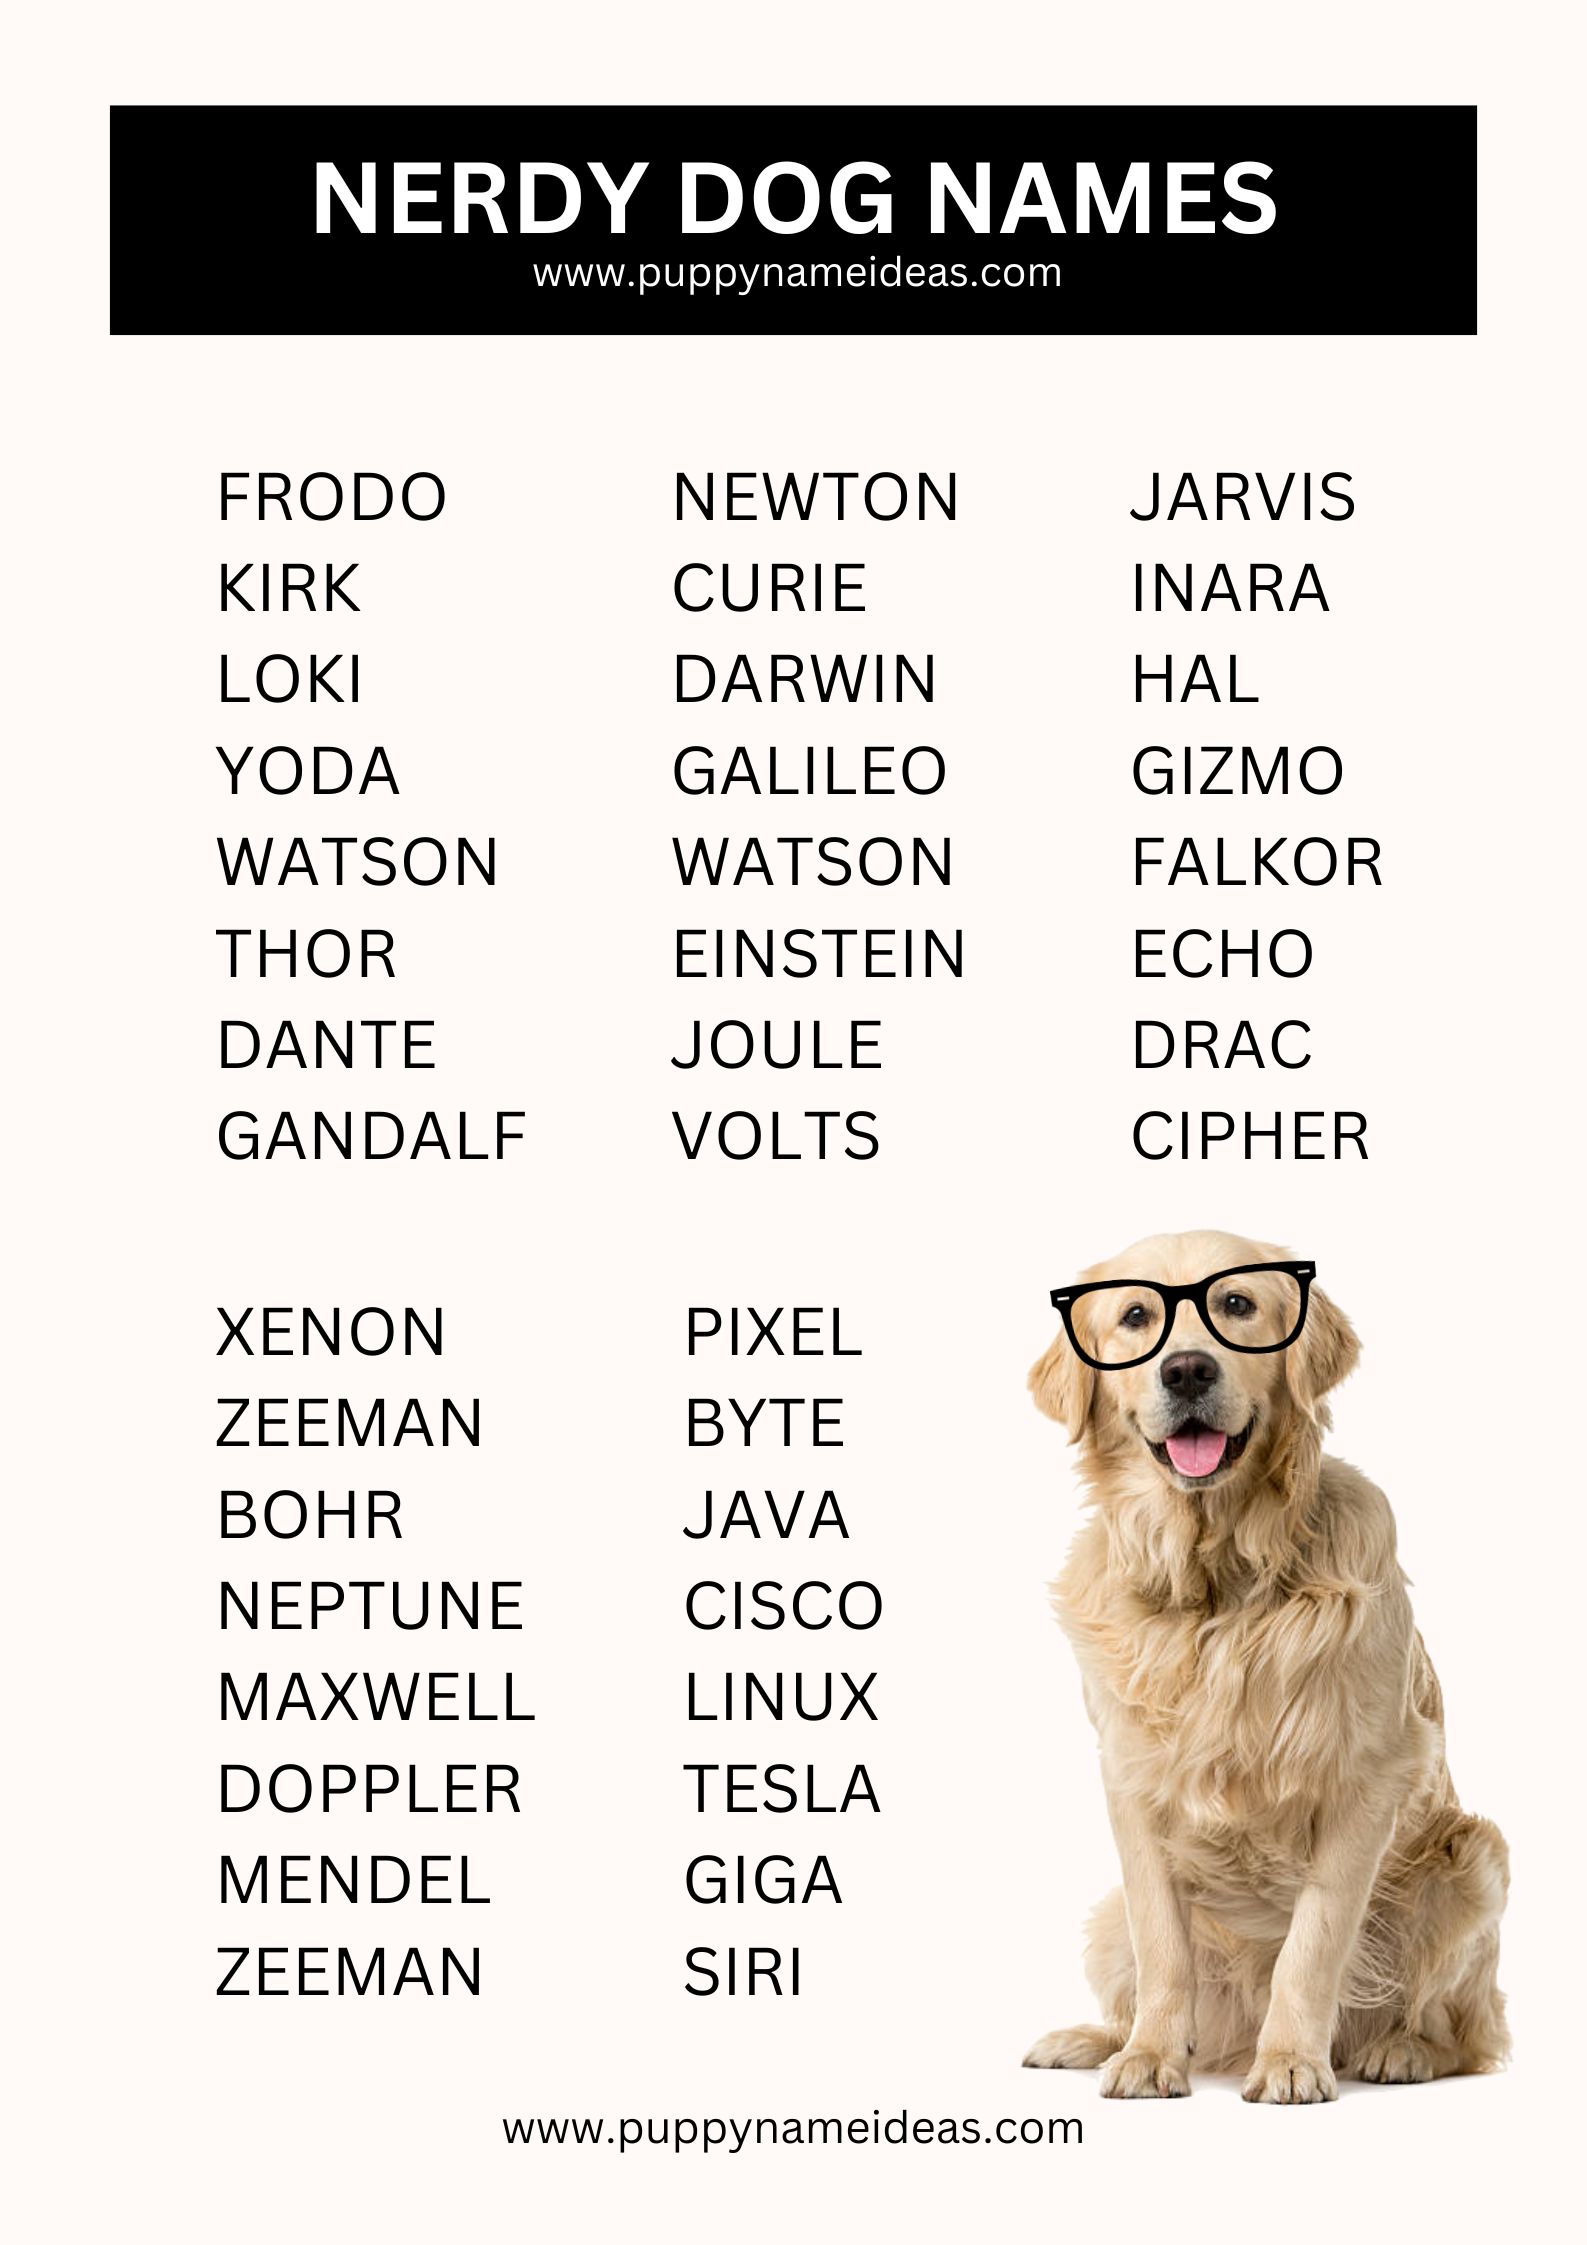 list of nerdy dog names